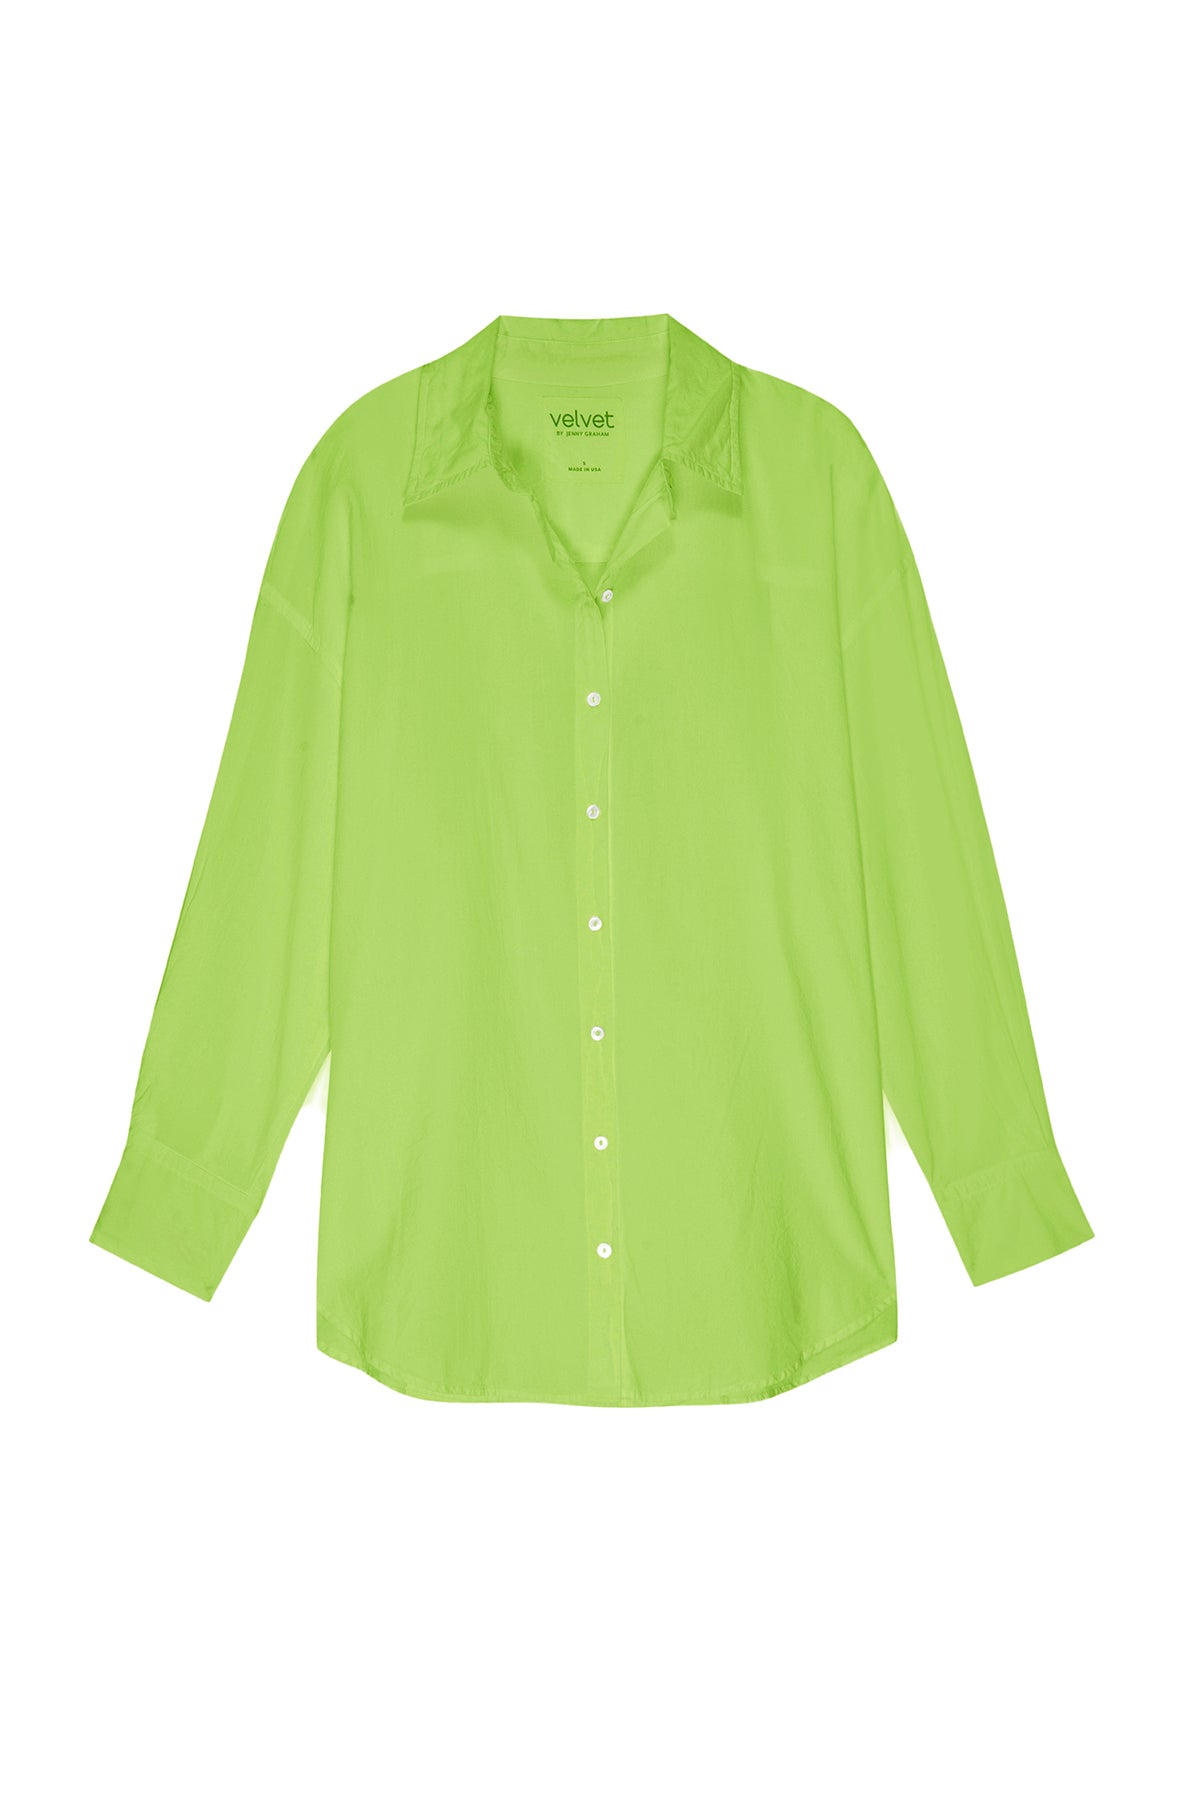 Redondo Button-Up Shirt in acid green flat-26040647581889